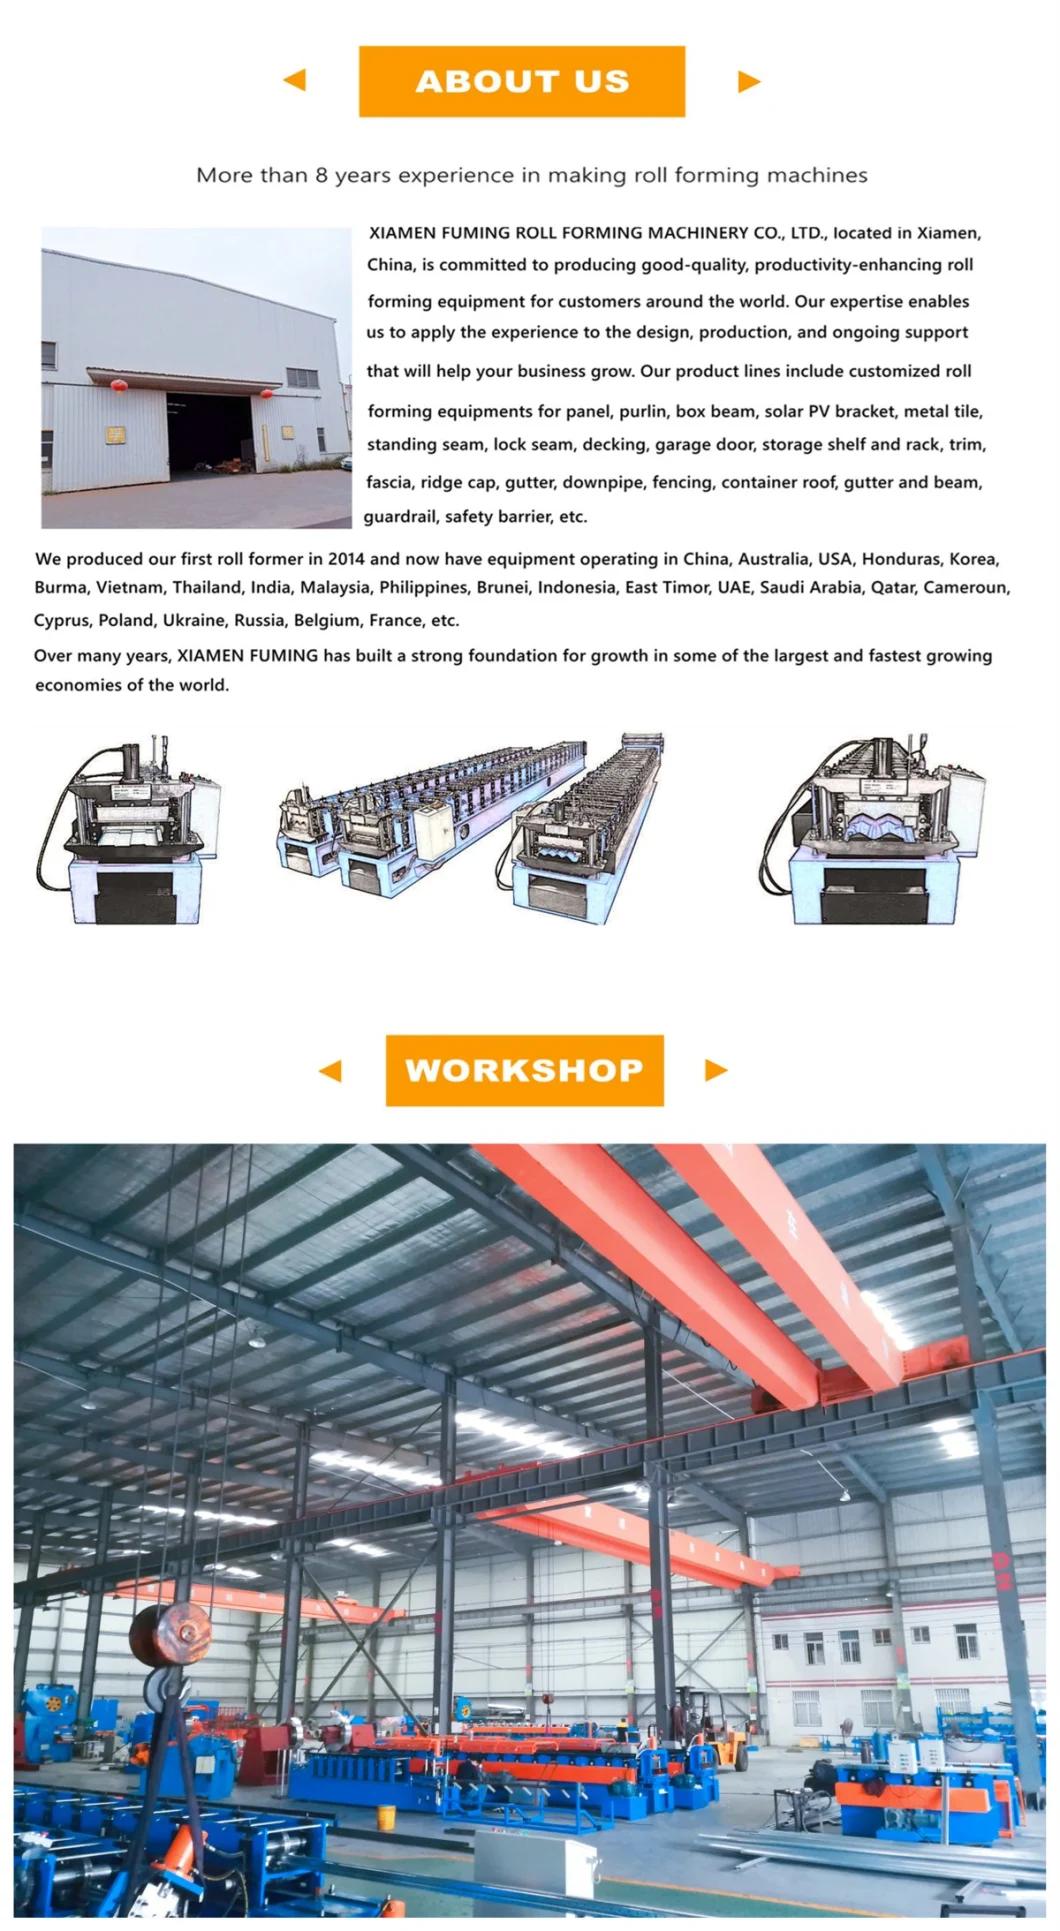 Roof Gear/Sprocket, Gear Box, Toroidal Worm Box Xiamen Purlin Machine